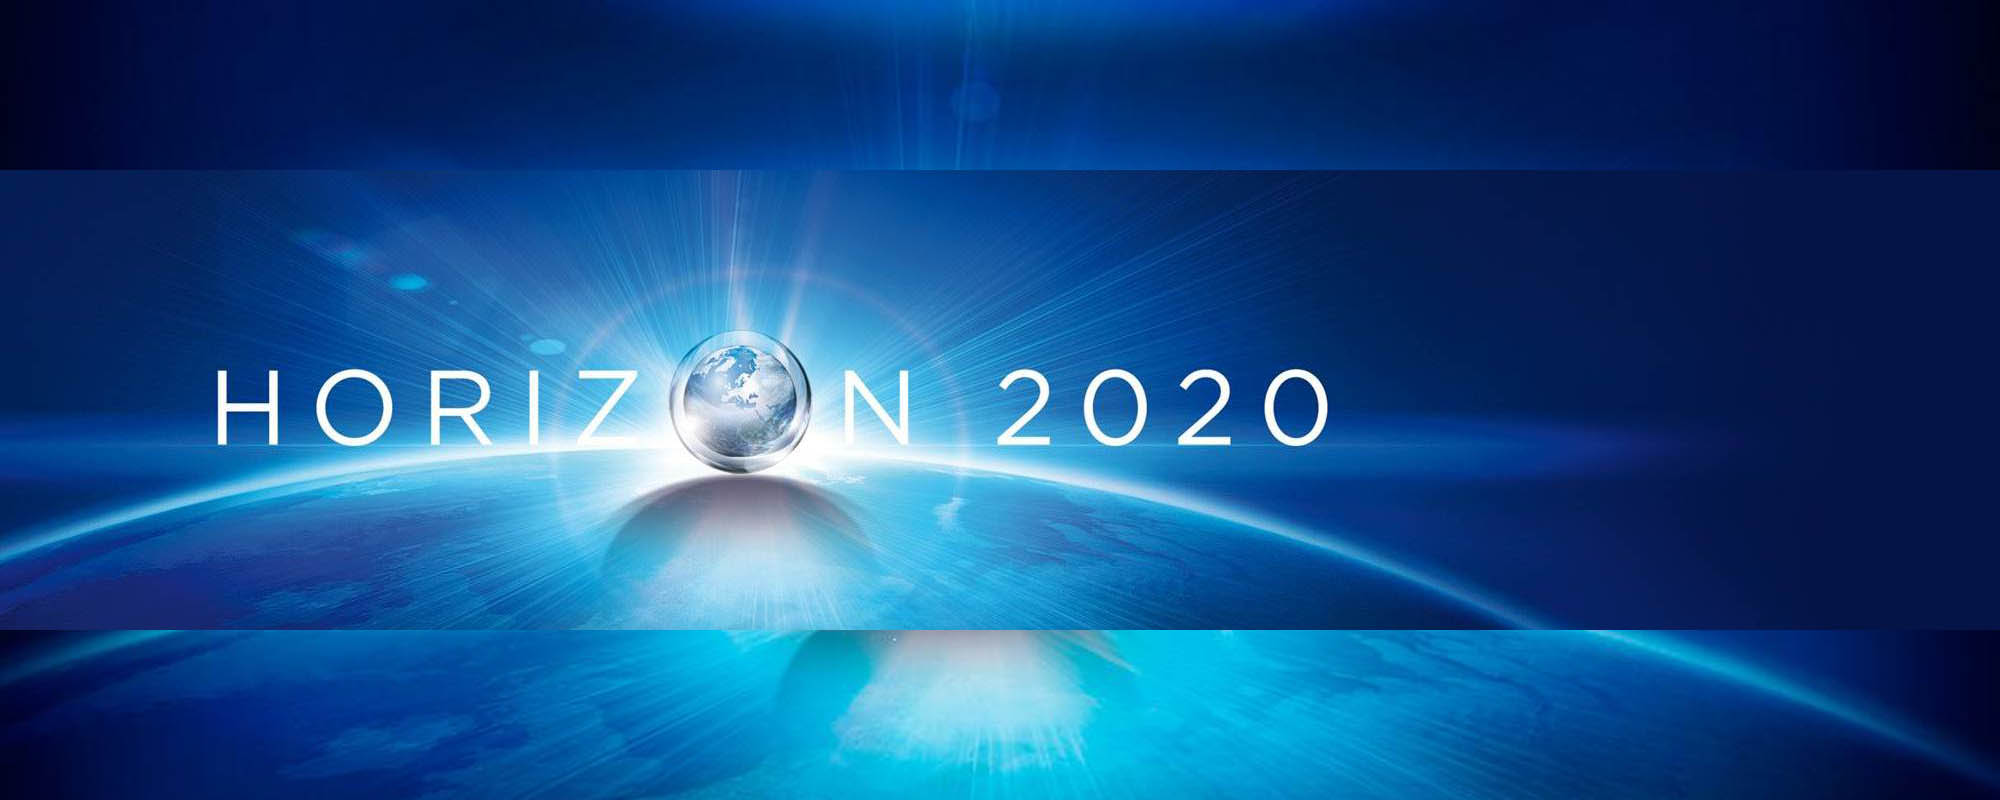 Horizon 2020 to Fund Two Bilkent Faculty Members